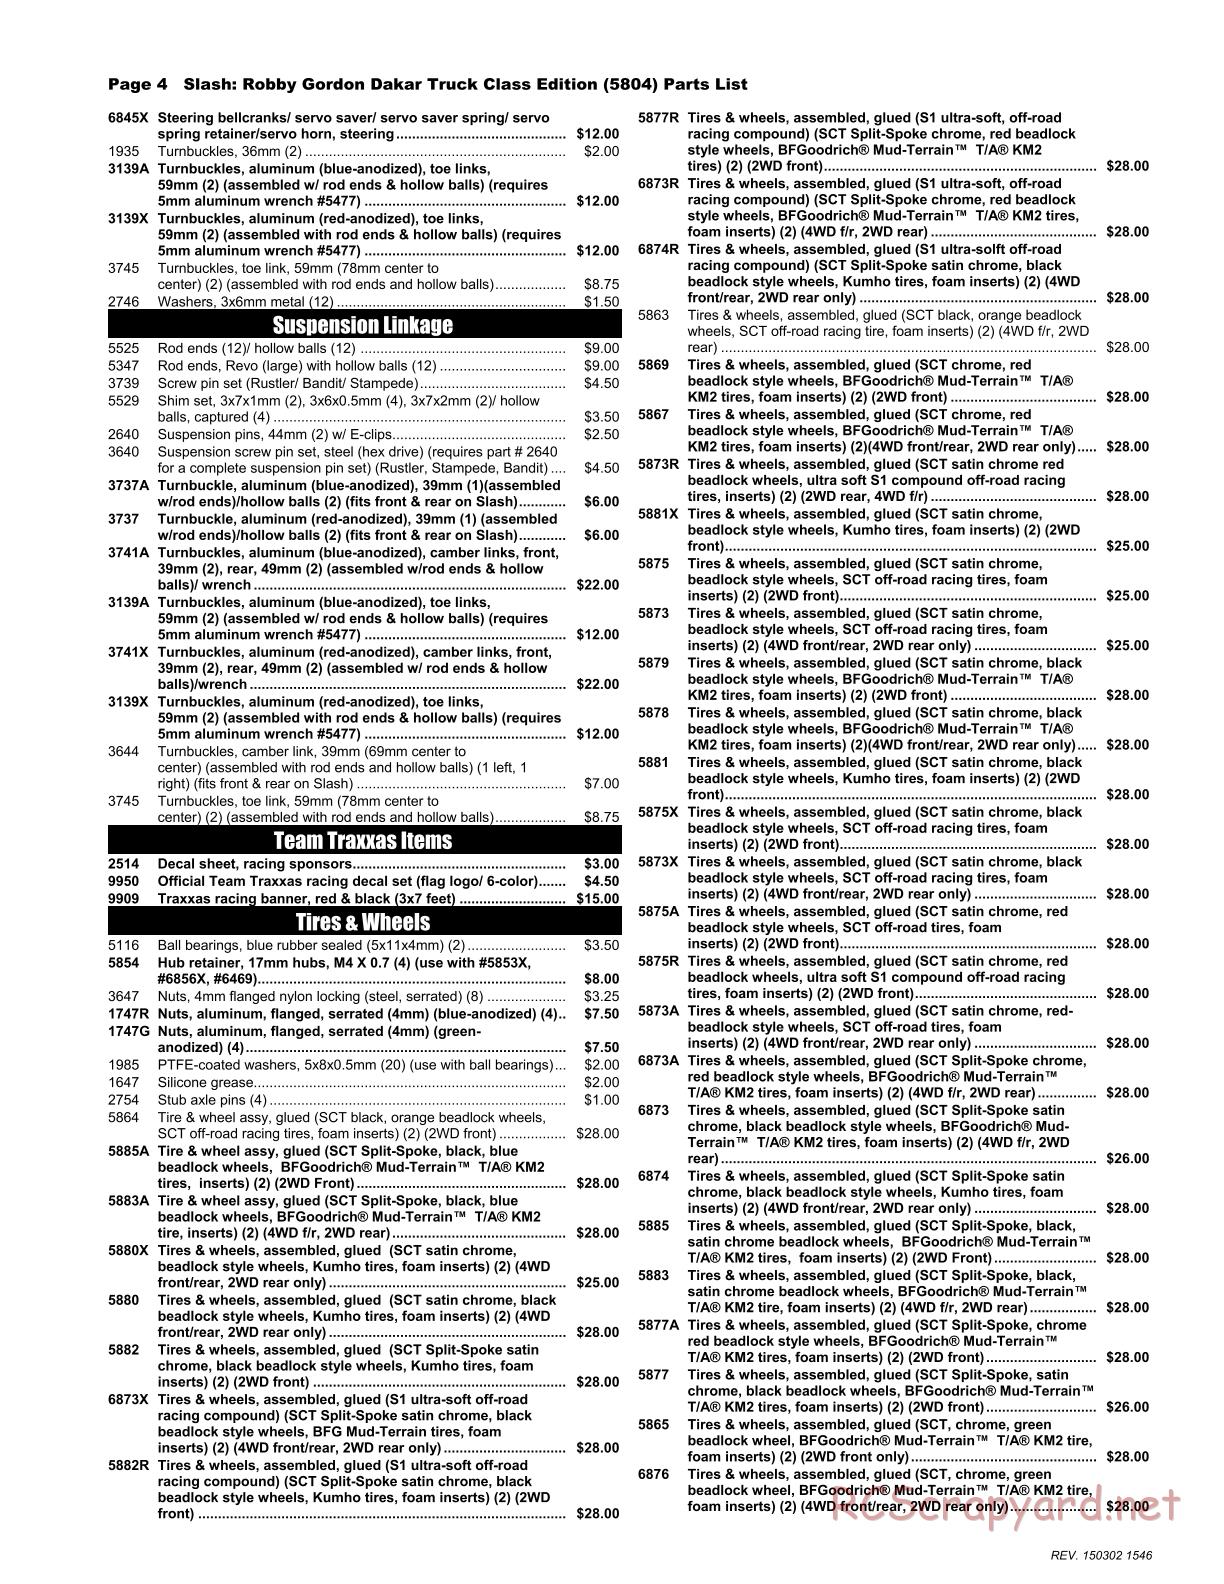 Traxxas - Slash 2WD Robby Gordon Dakar Ed (2012) - Parts List - Page 4